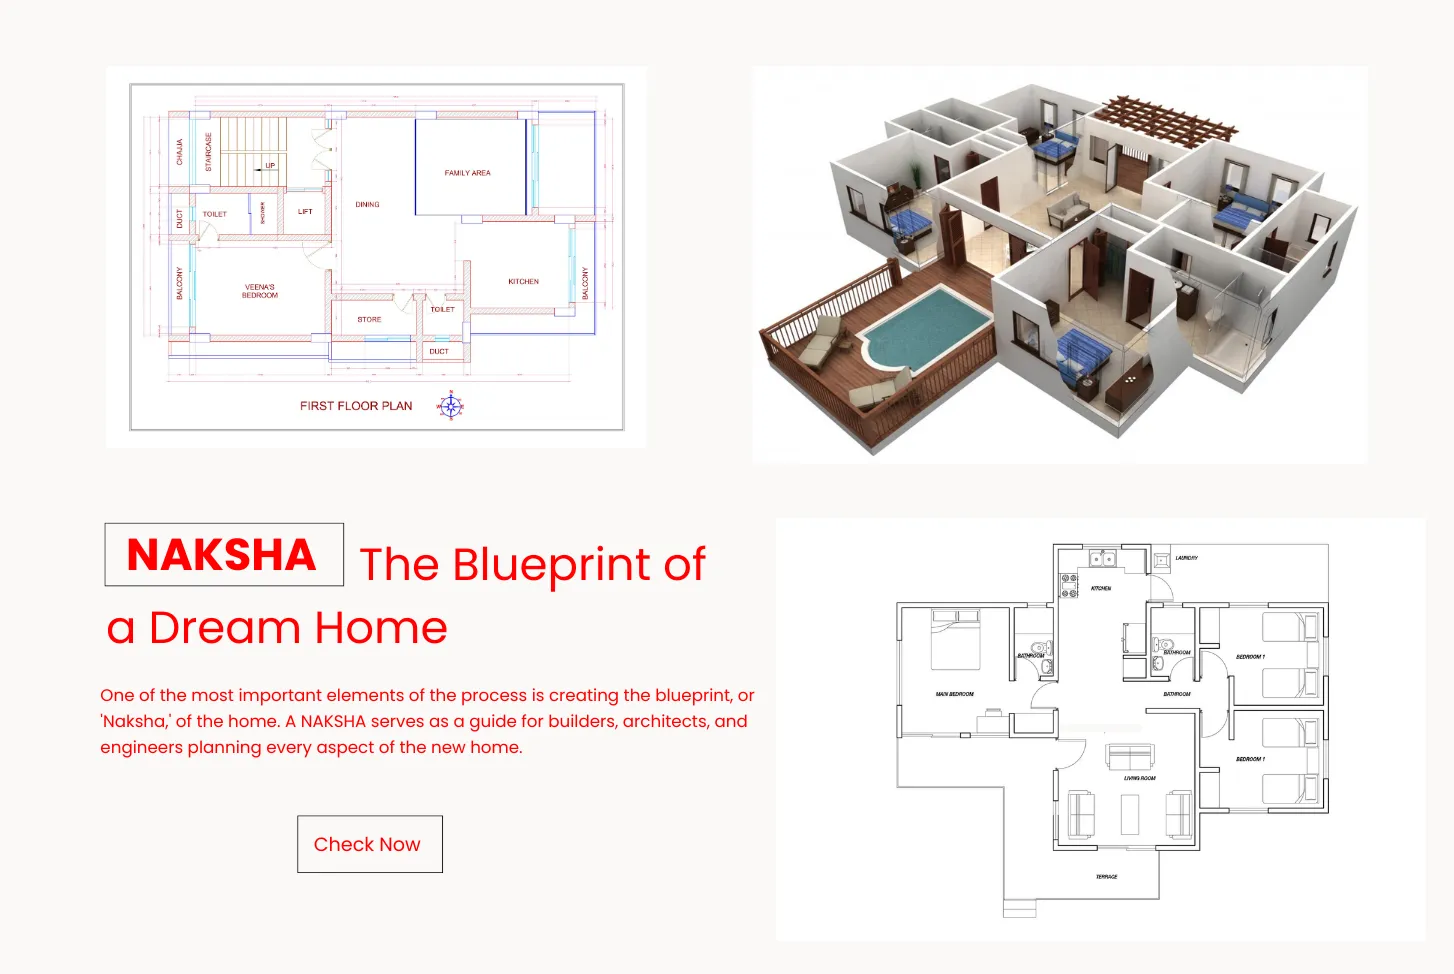 Naksha: The Blueprint of a Dream Home